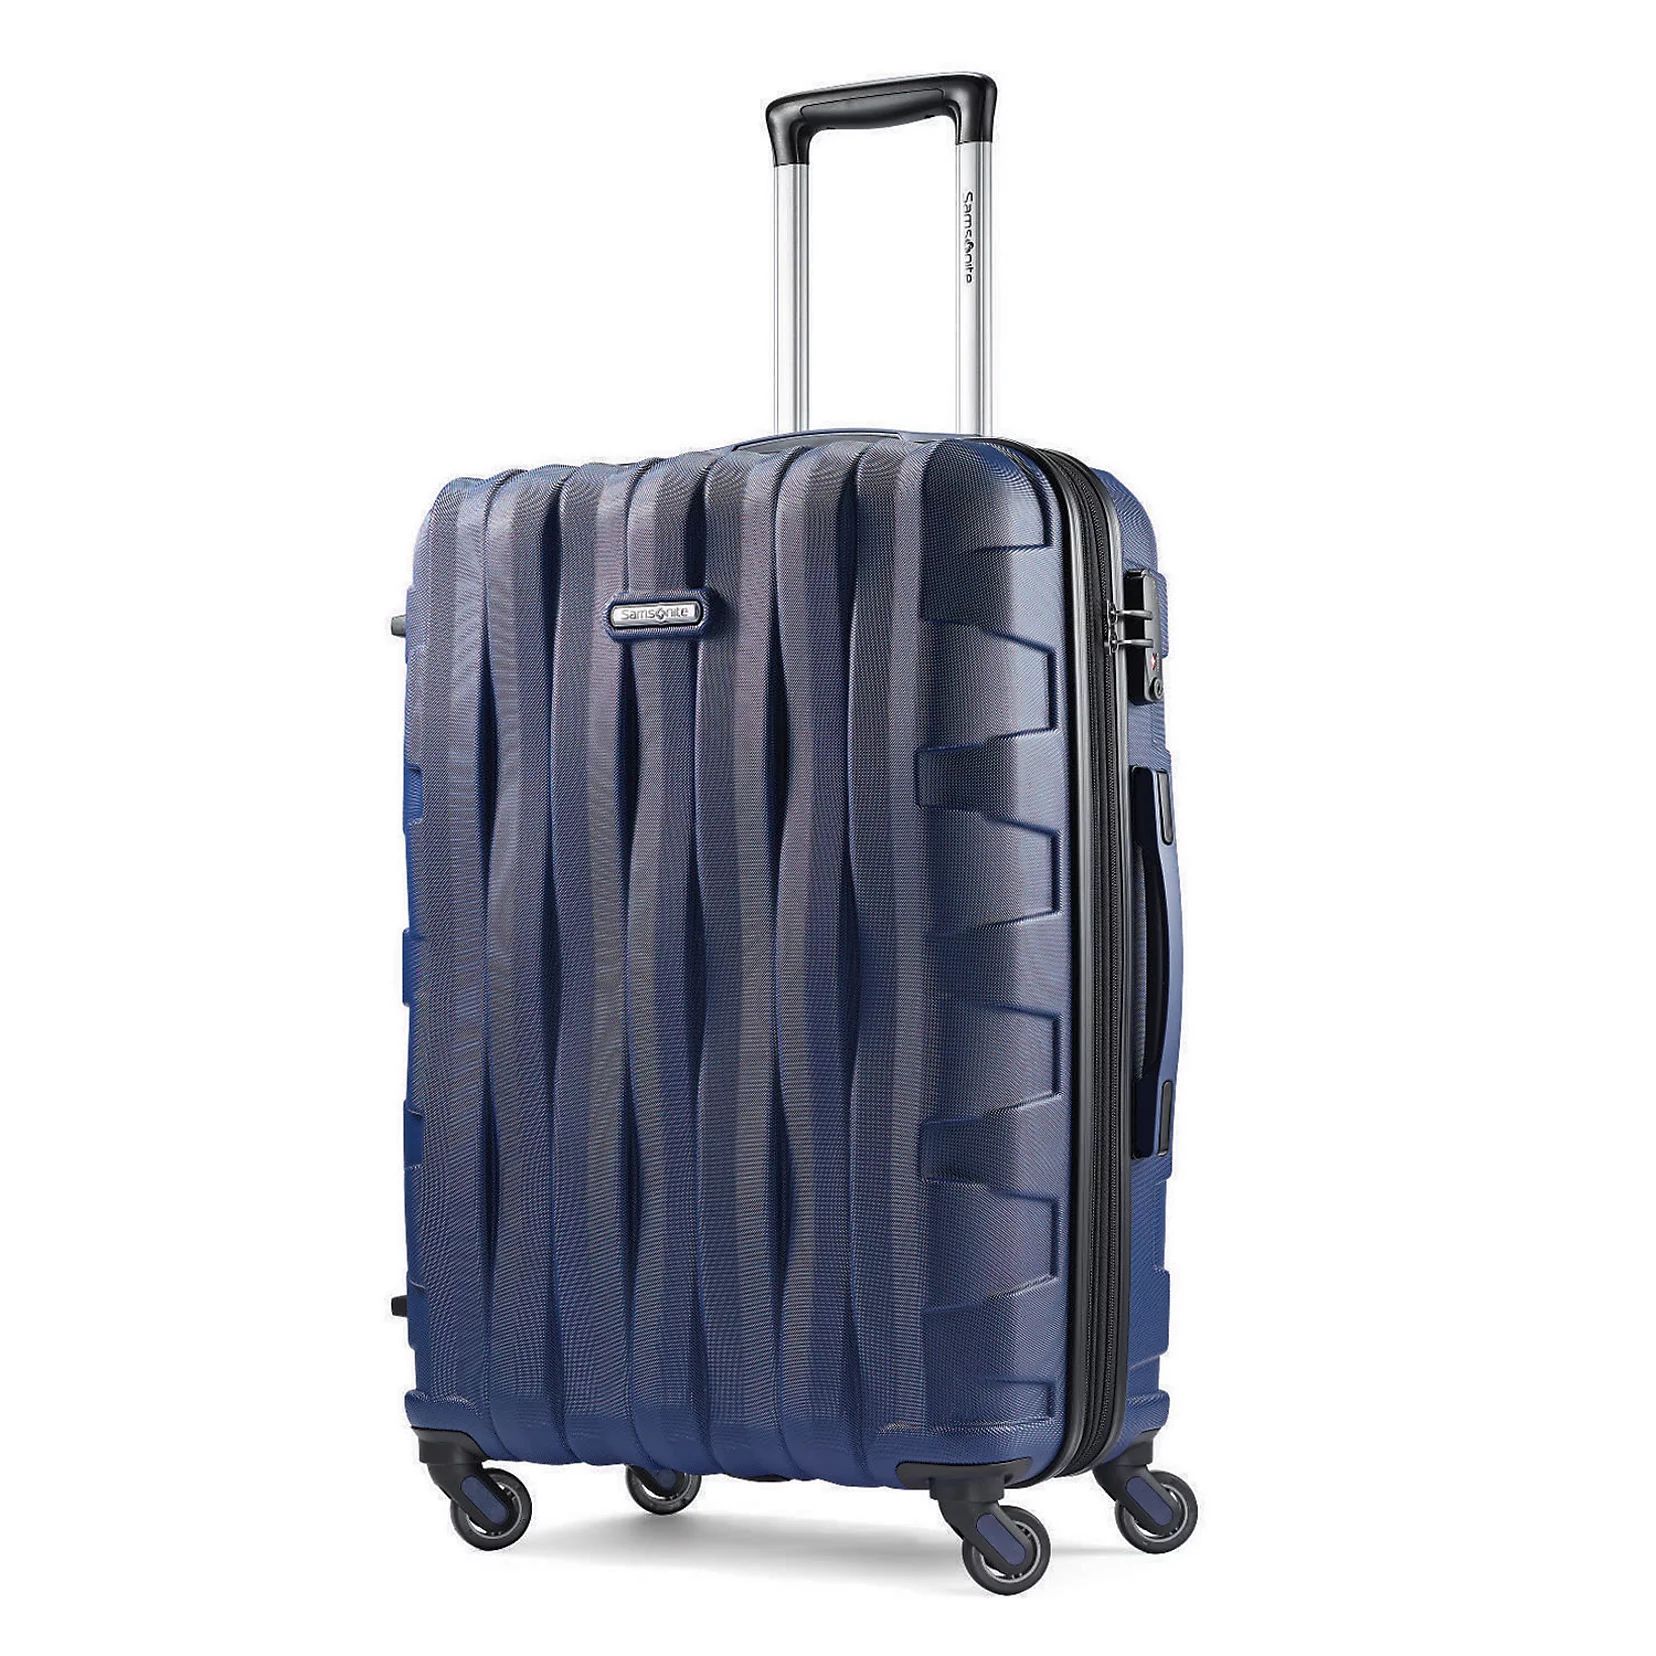 Samsonite Ziplite 3.0 Hardside Spinner Luggage | Kohl's